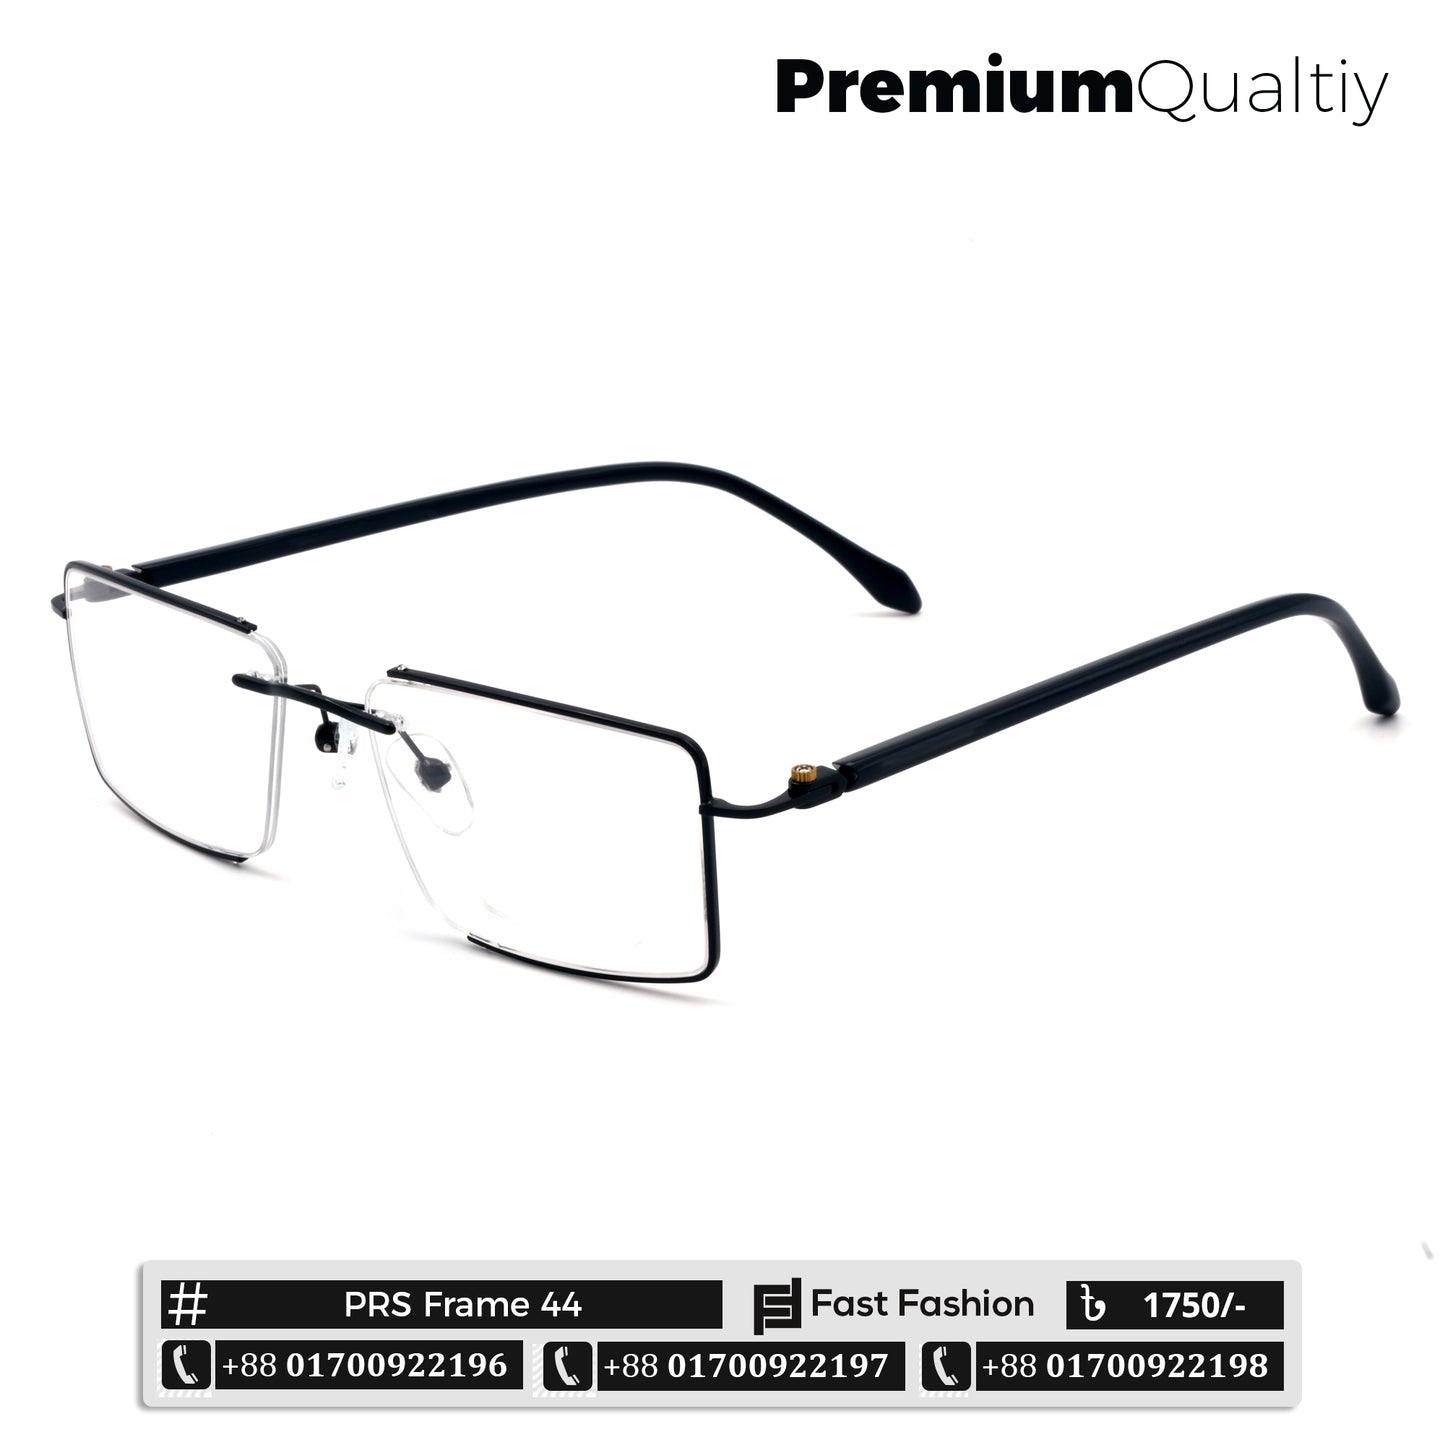 Trendy Modern Stylish New PRS Optic Frame | PRS Frame 44 | Premium Quality